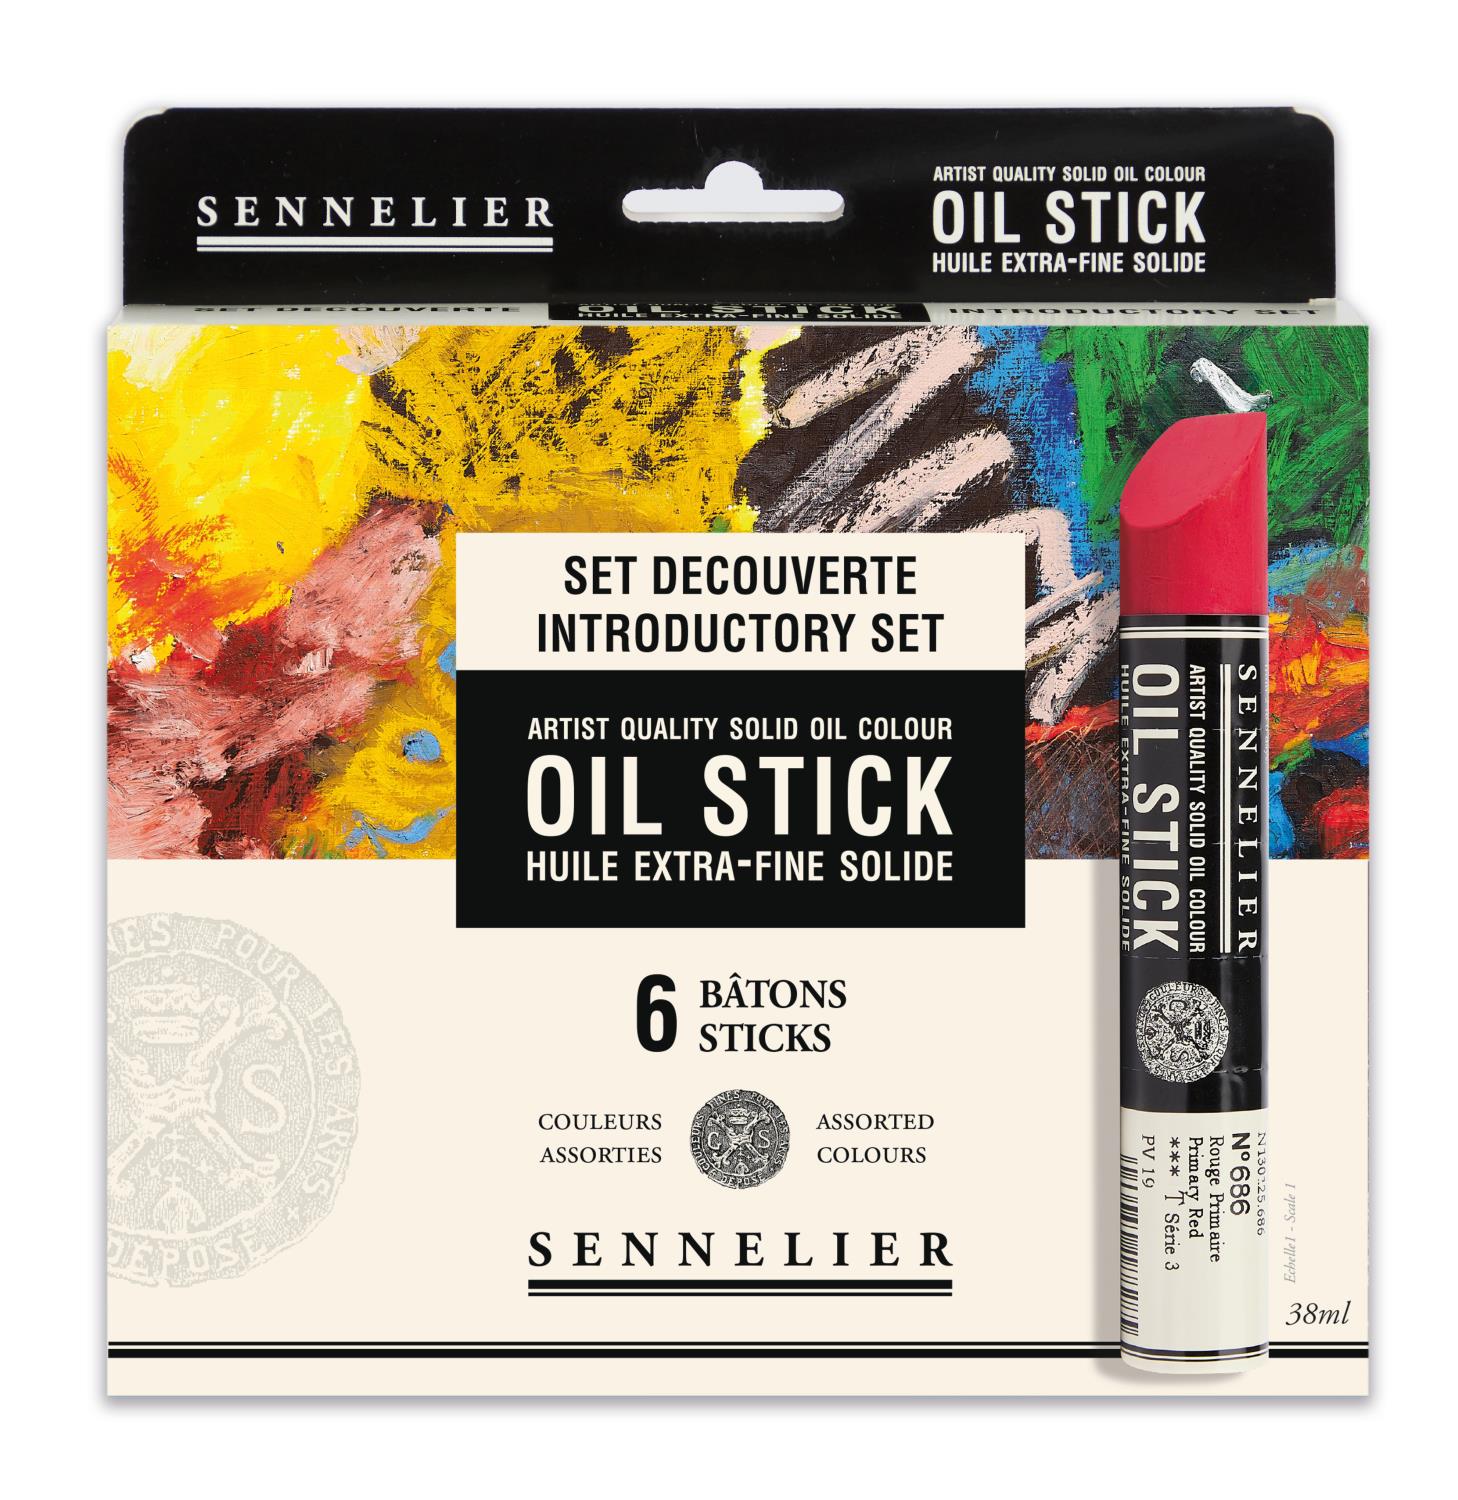 Sennelier Artist Oil Stick Introductory set